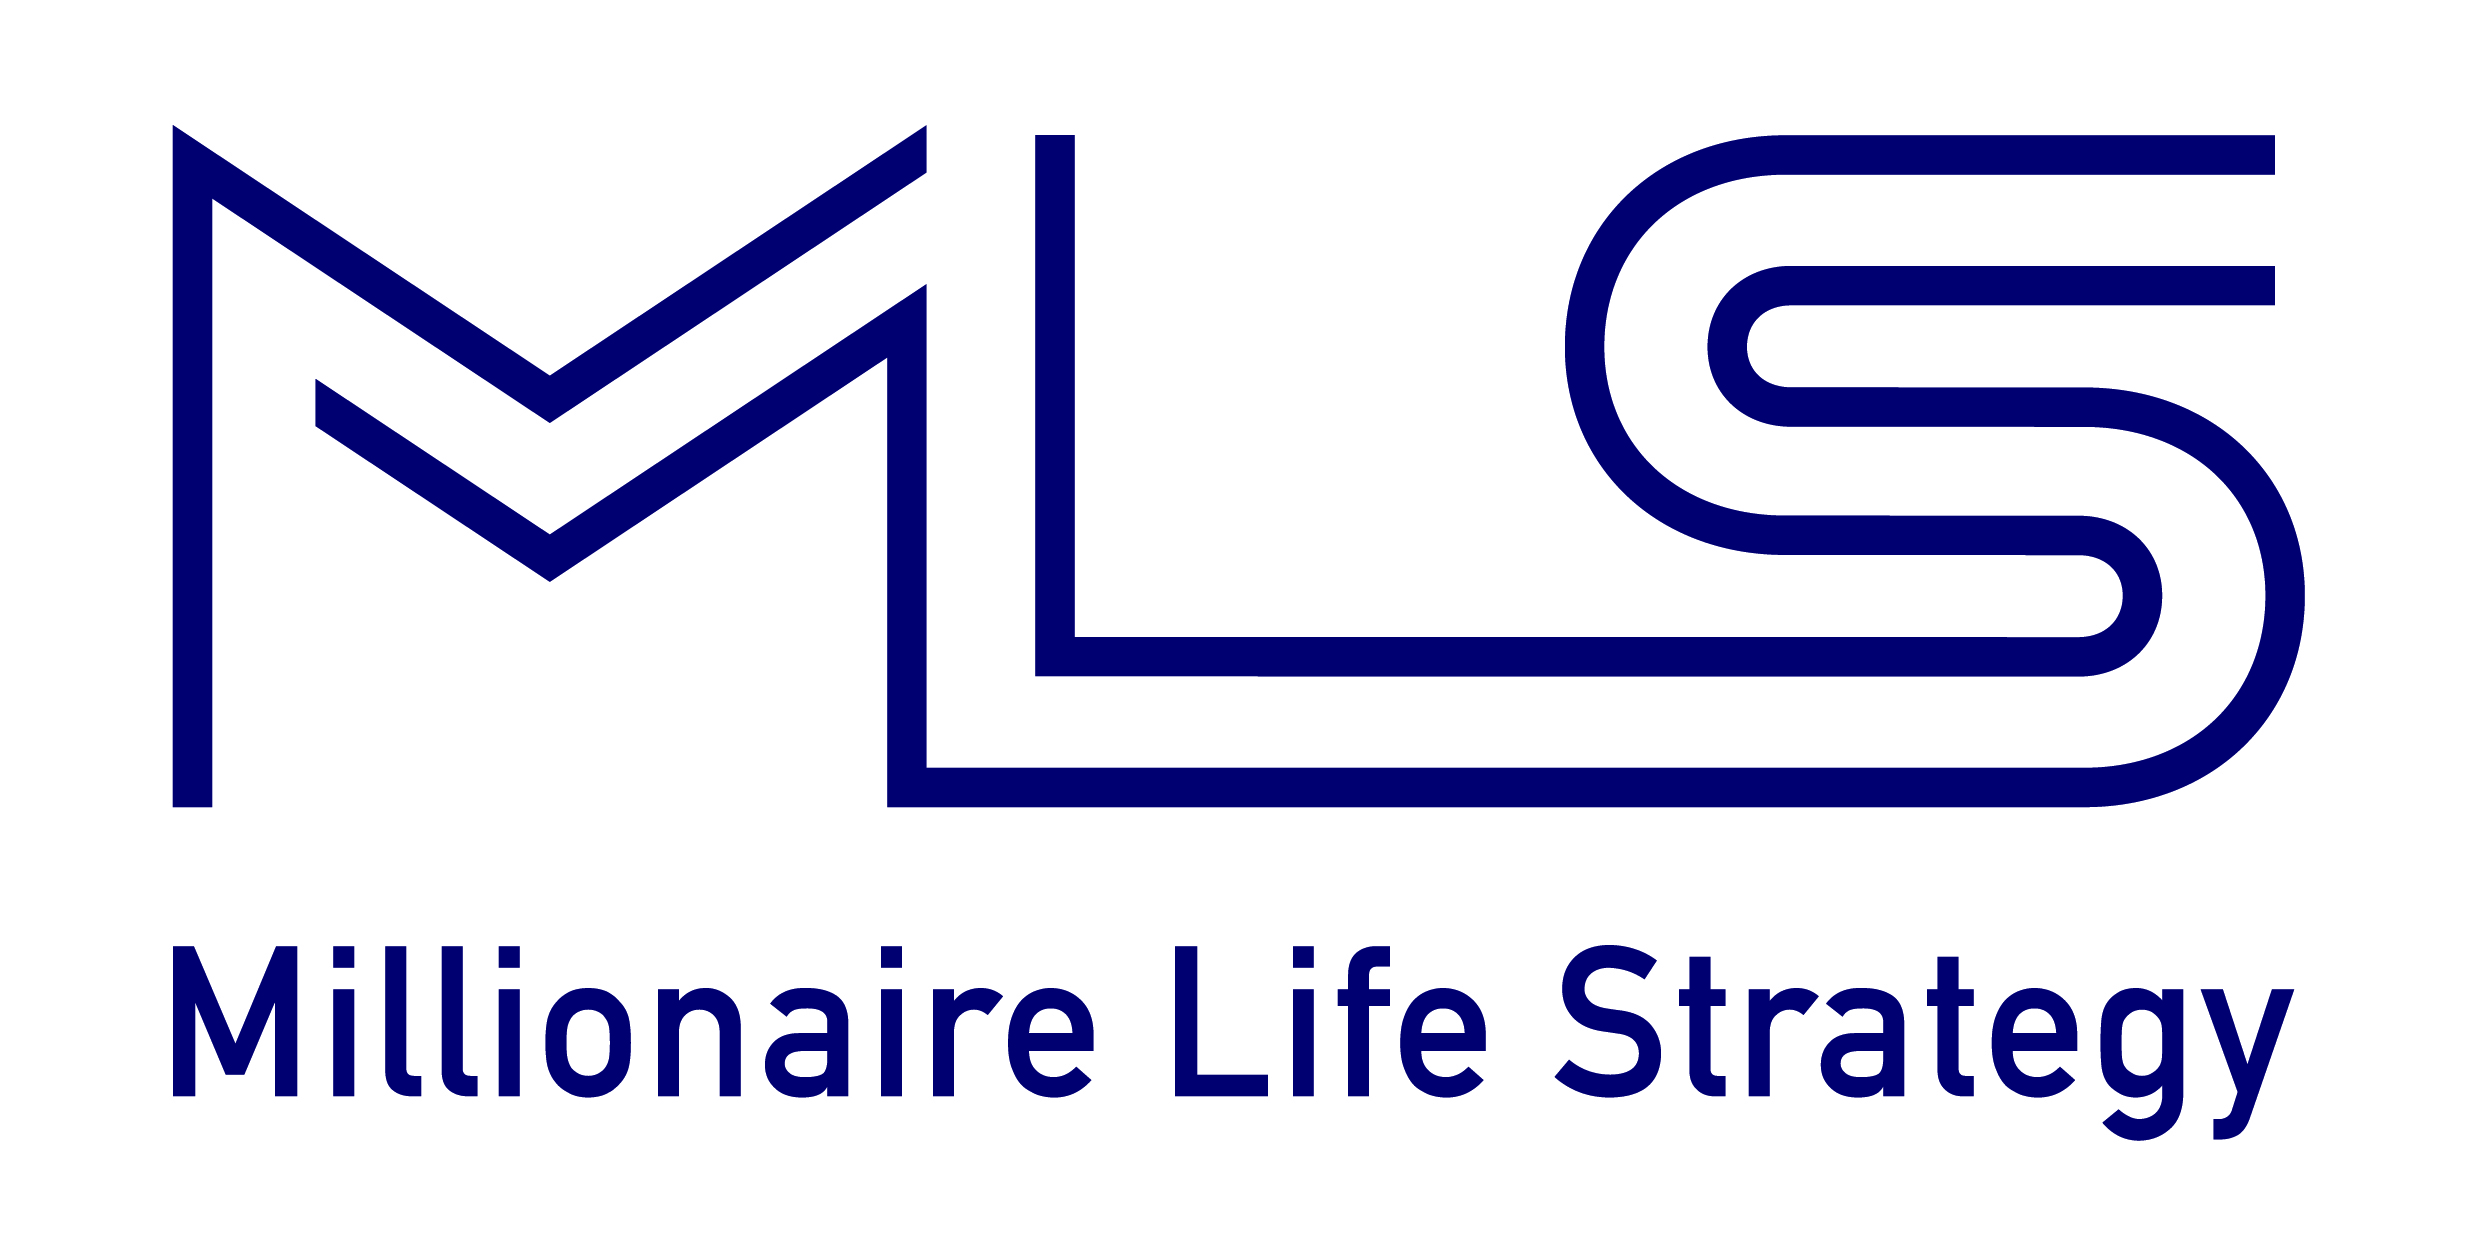 Millionaire Life Strategy logo CMYK